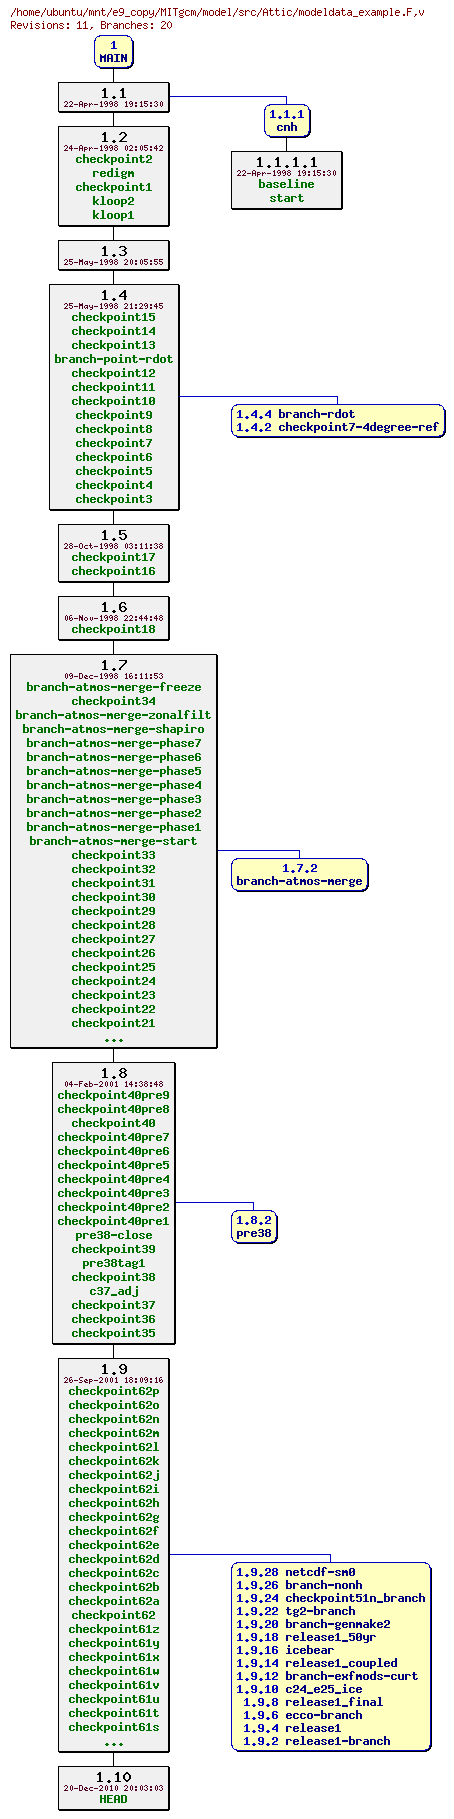 Revisions of MITgcm/model/src/modeldata_example.F